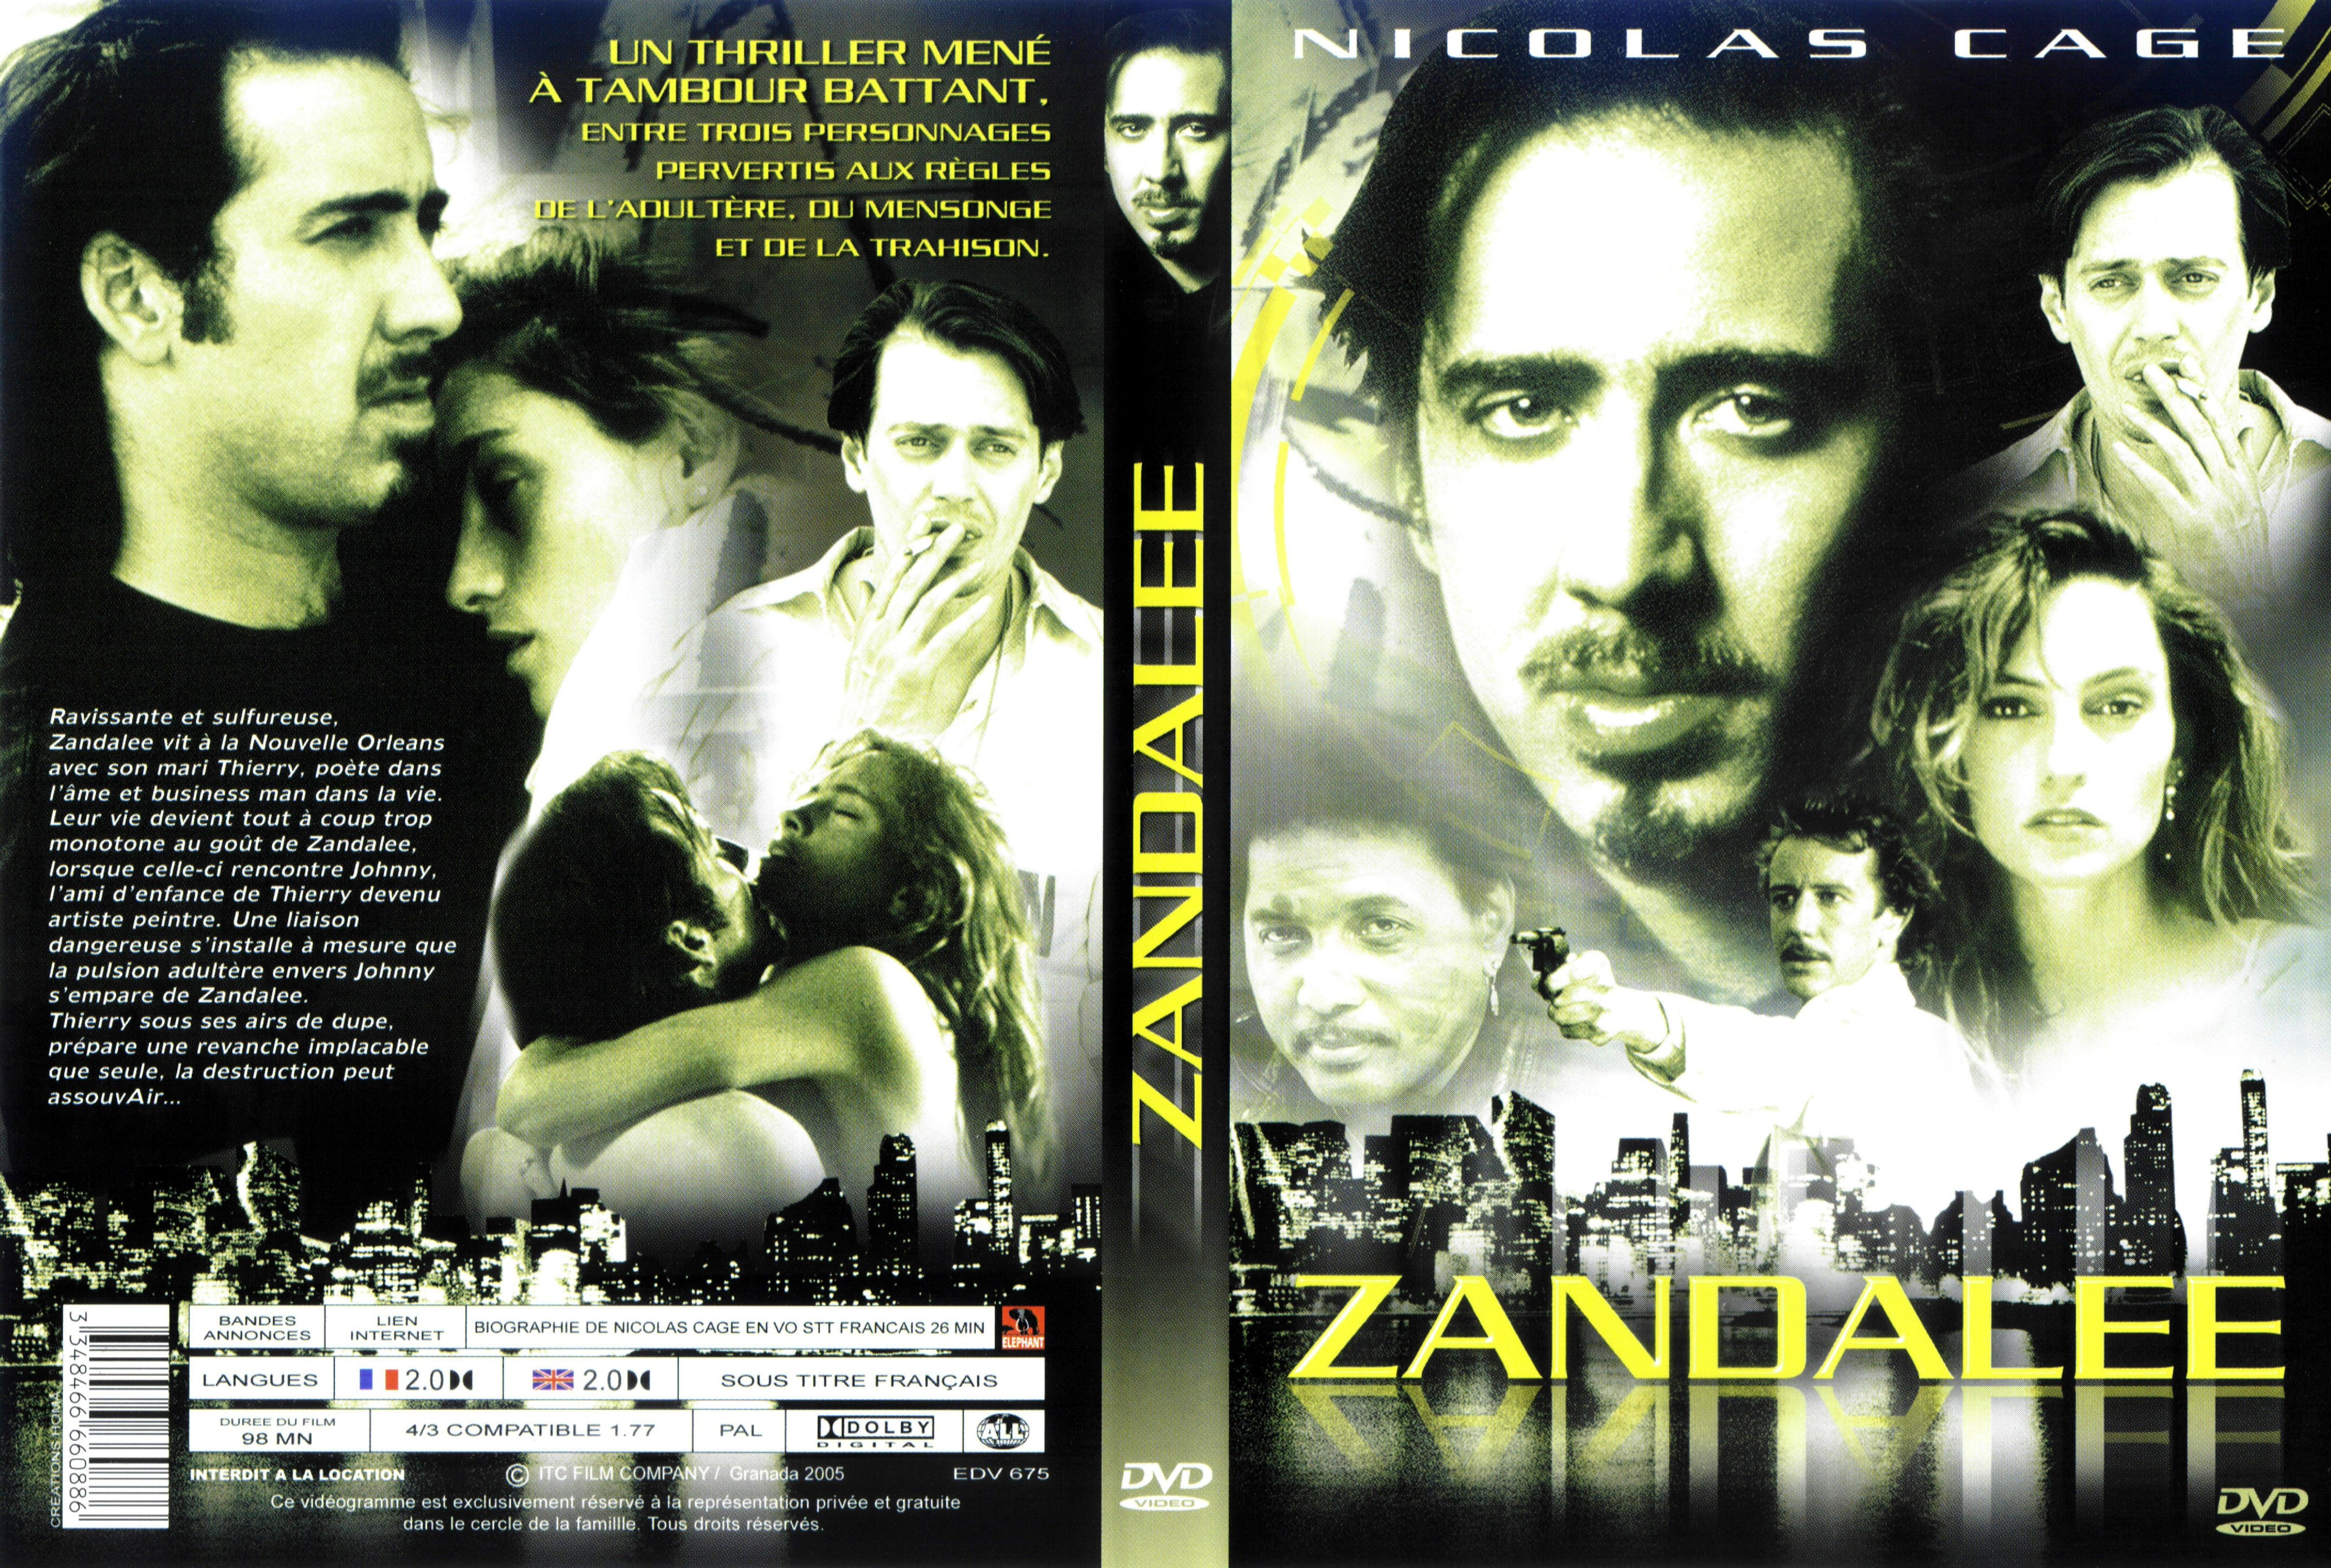 Jaquette DVD Zandalee